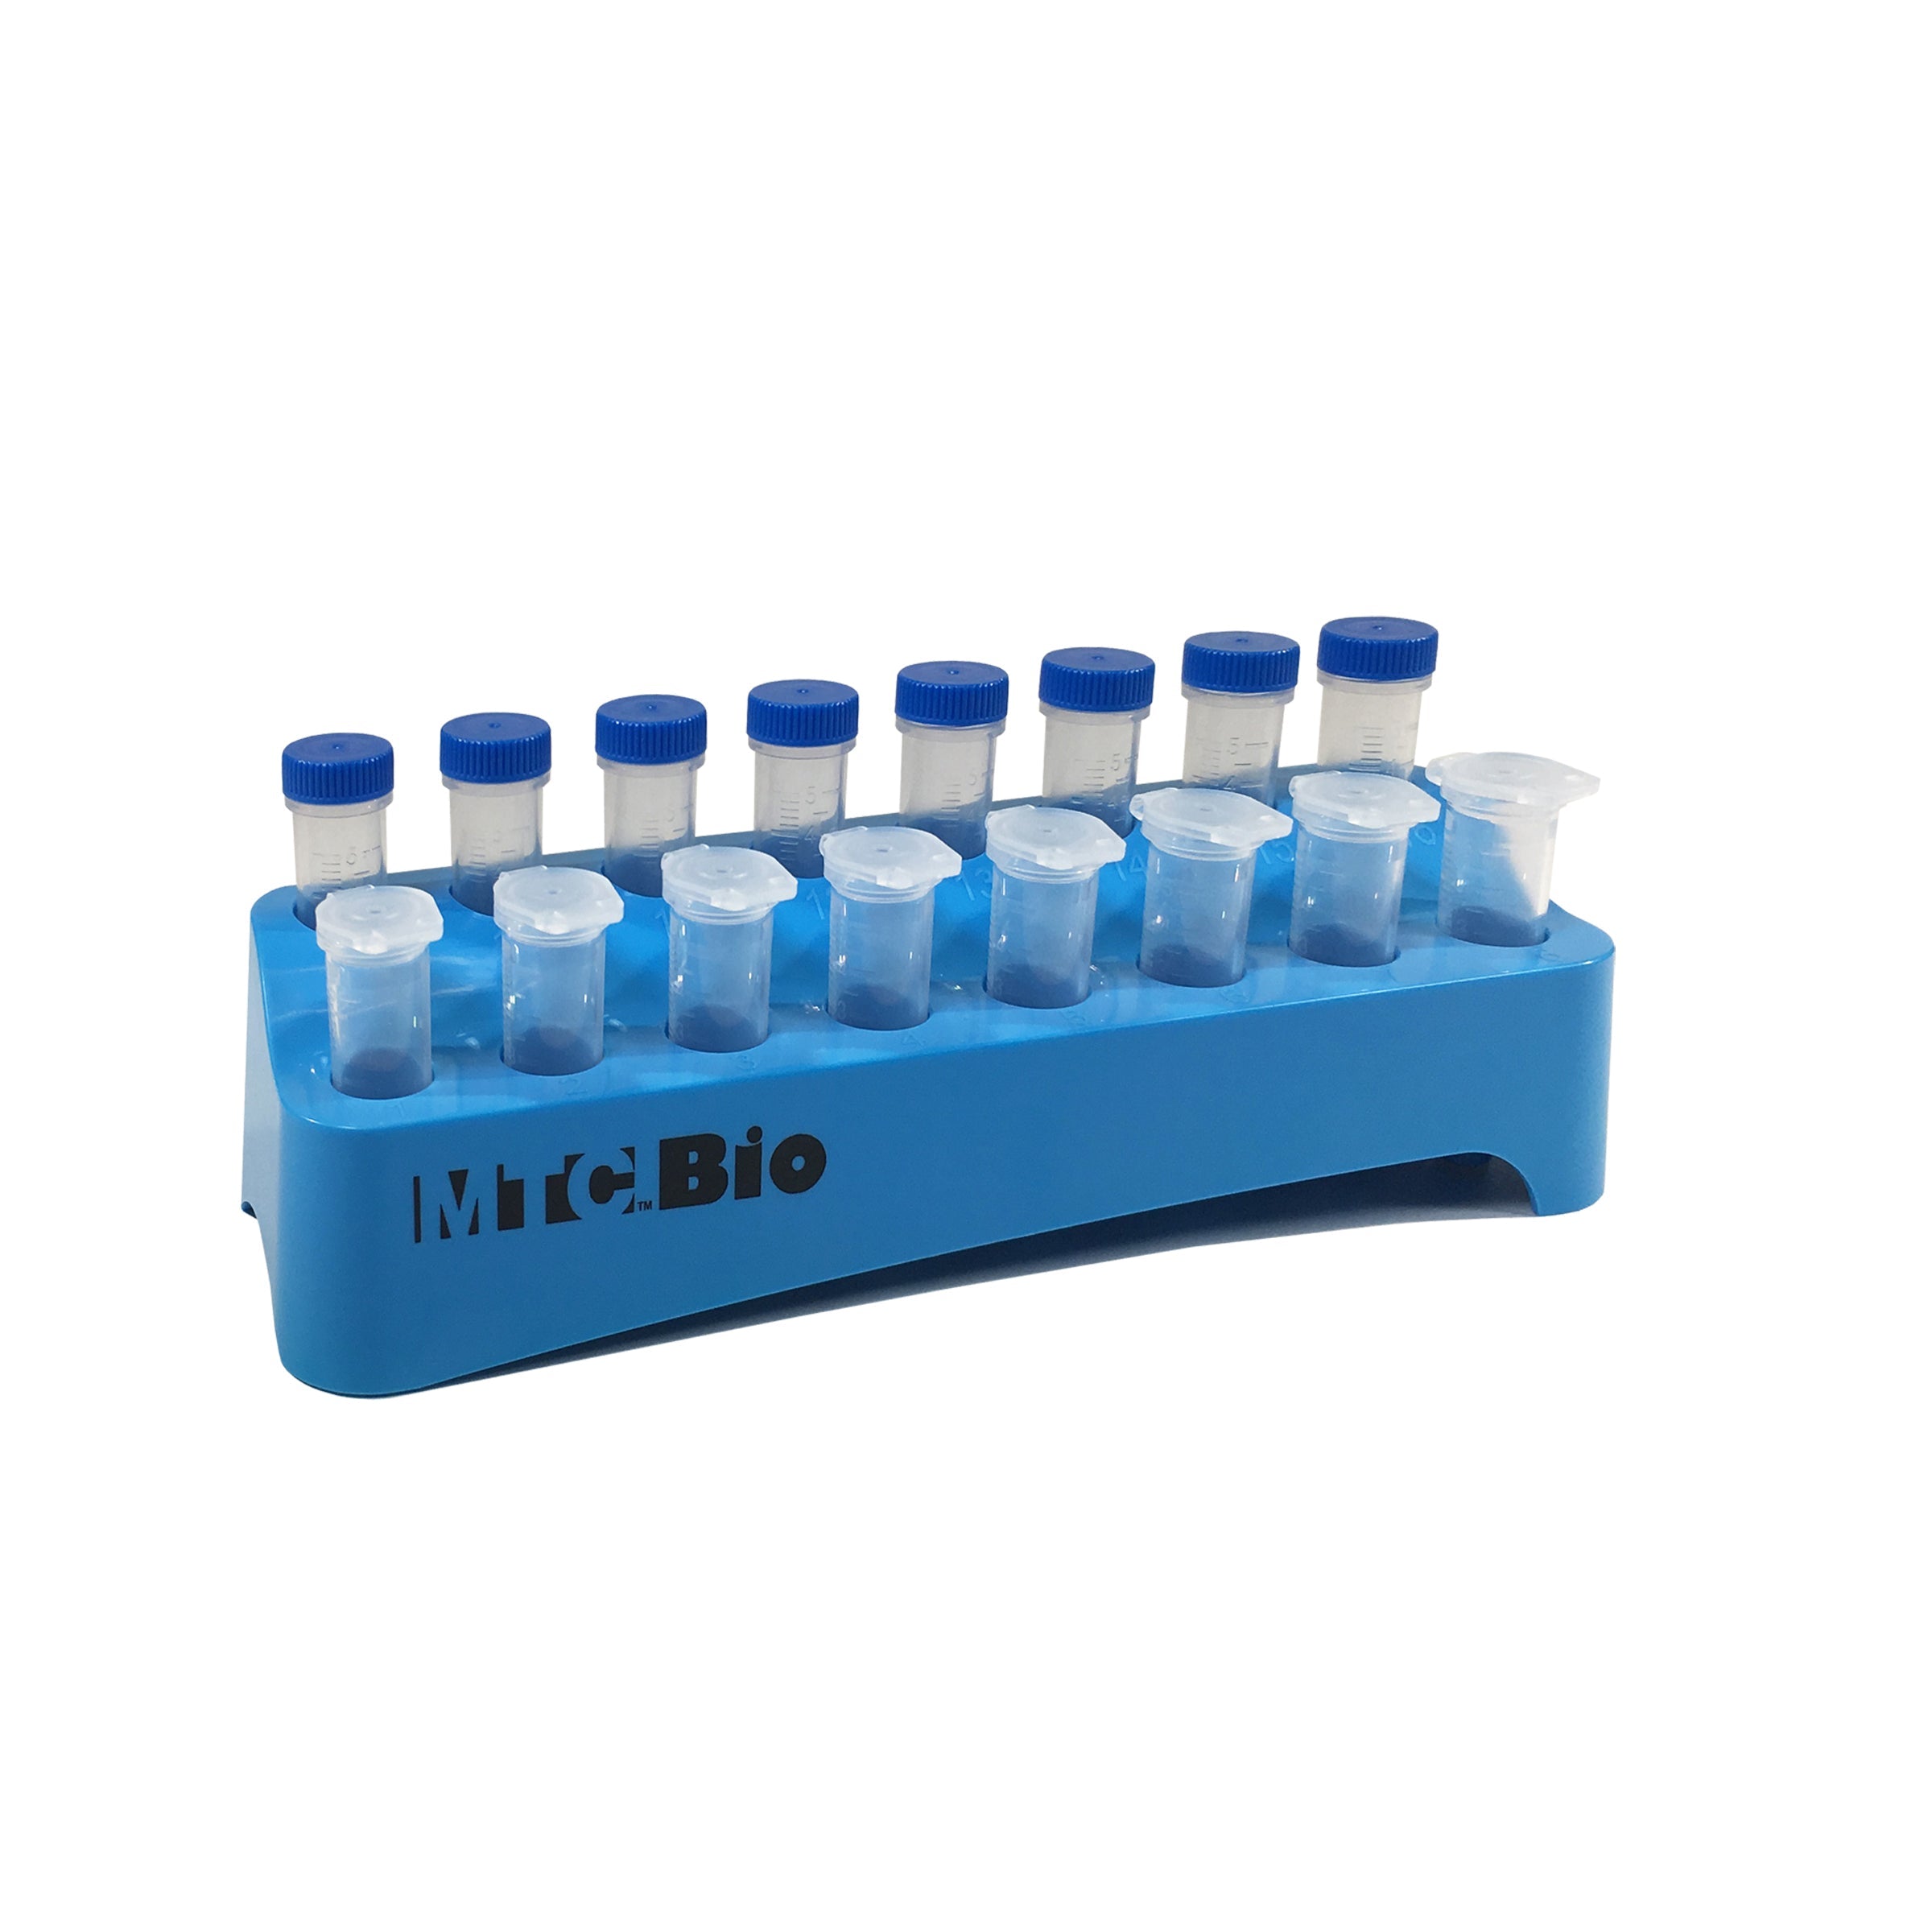 MTC Bio C2590, 2-Tiered Rack for 5ml Macrotubes, 16 Place, 1 Rack